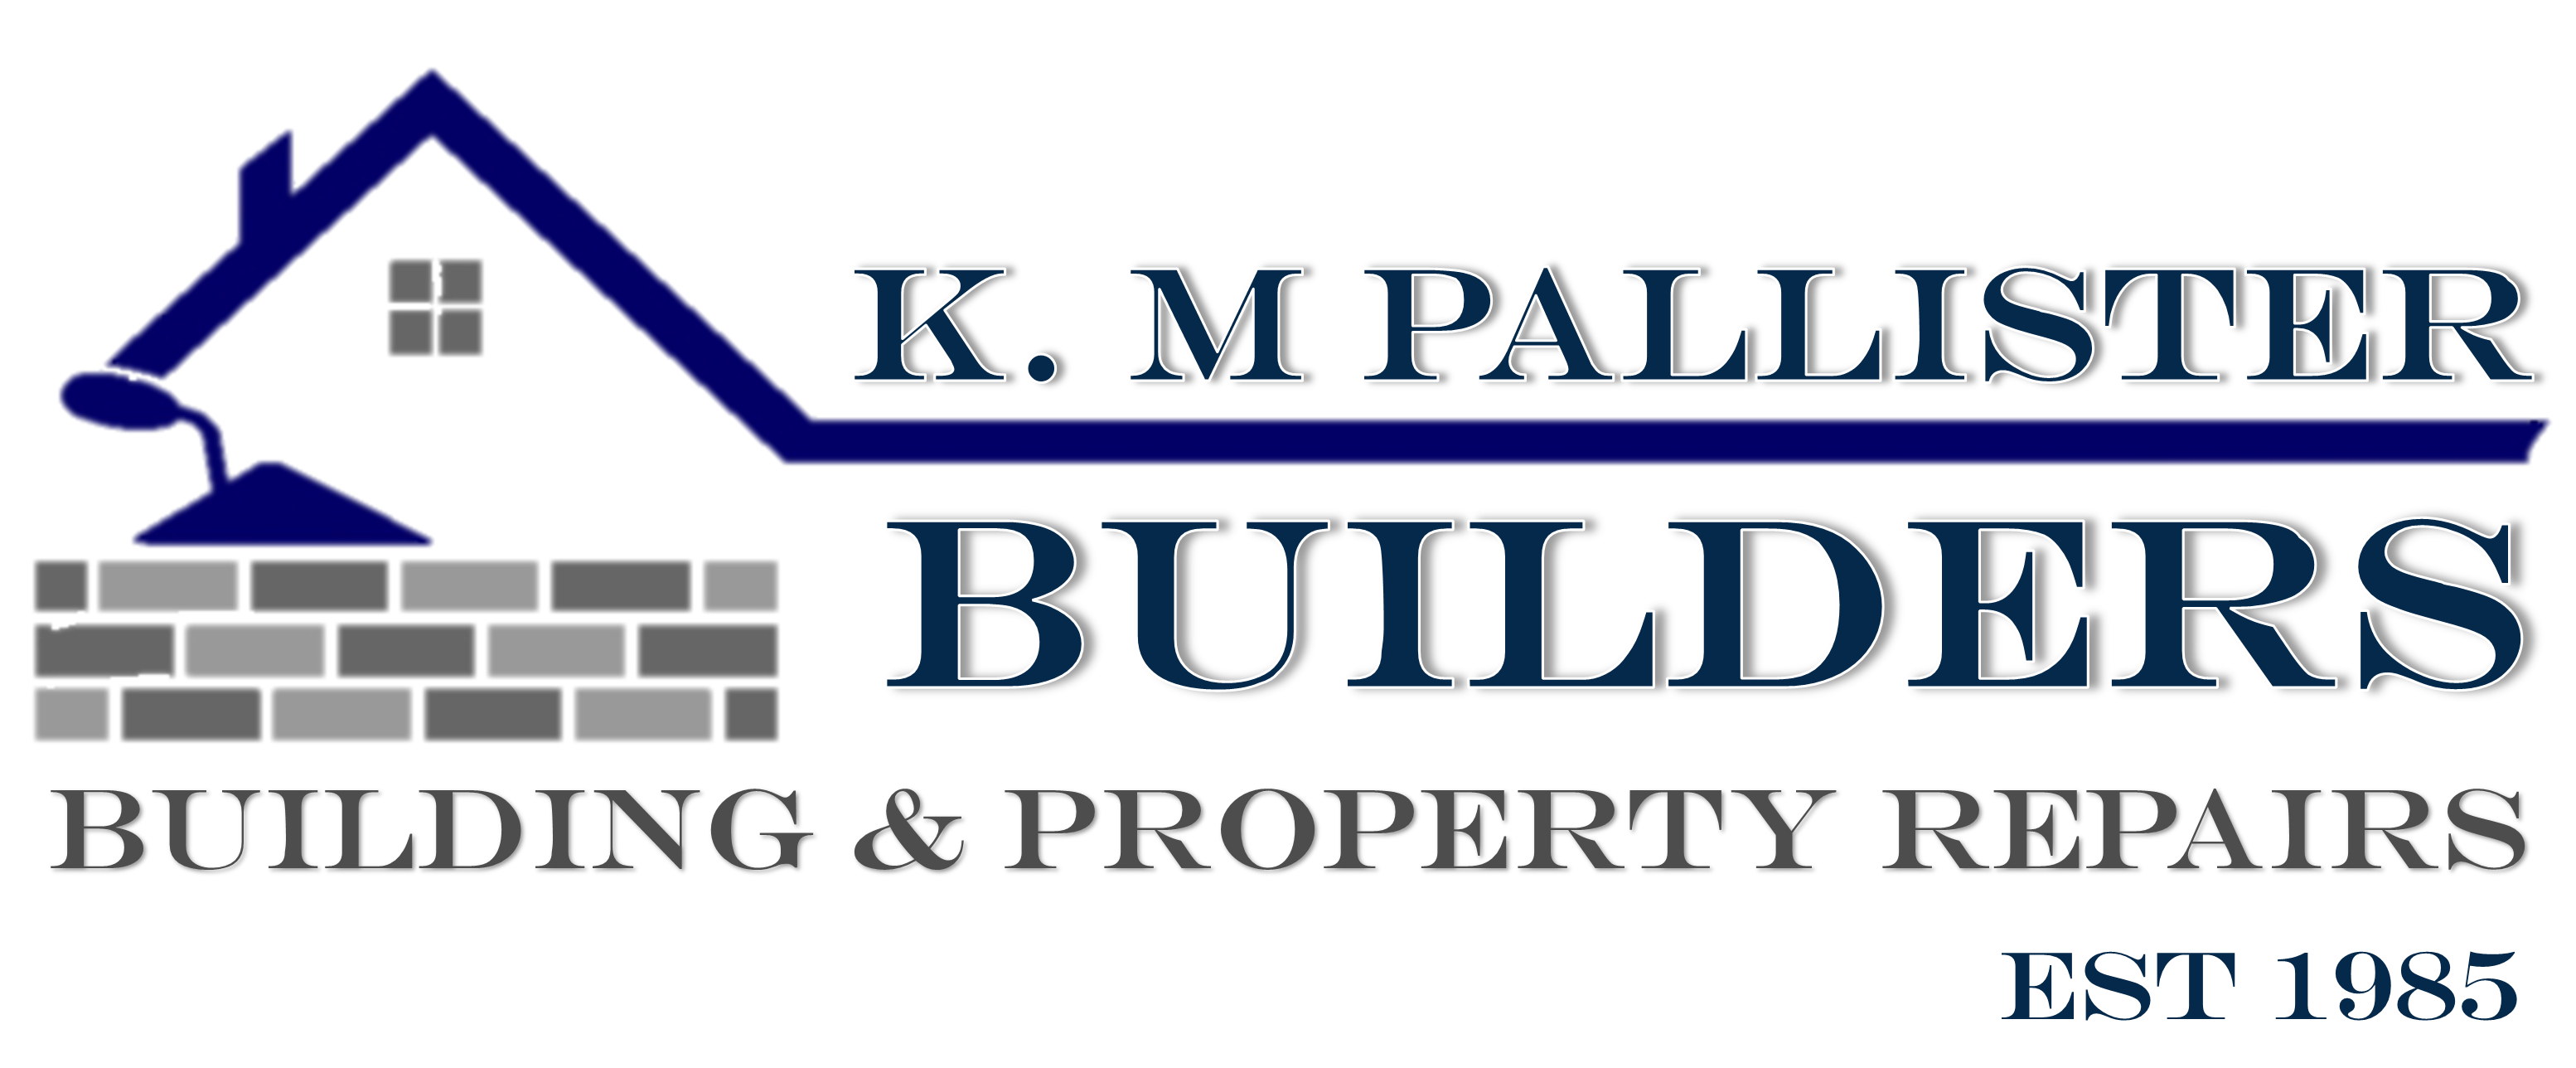 KM Pallister Builders